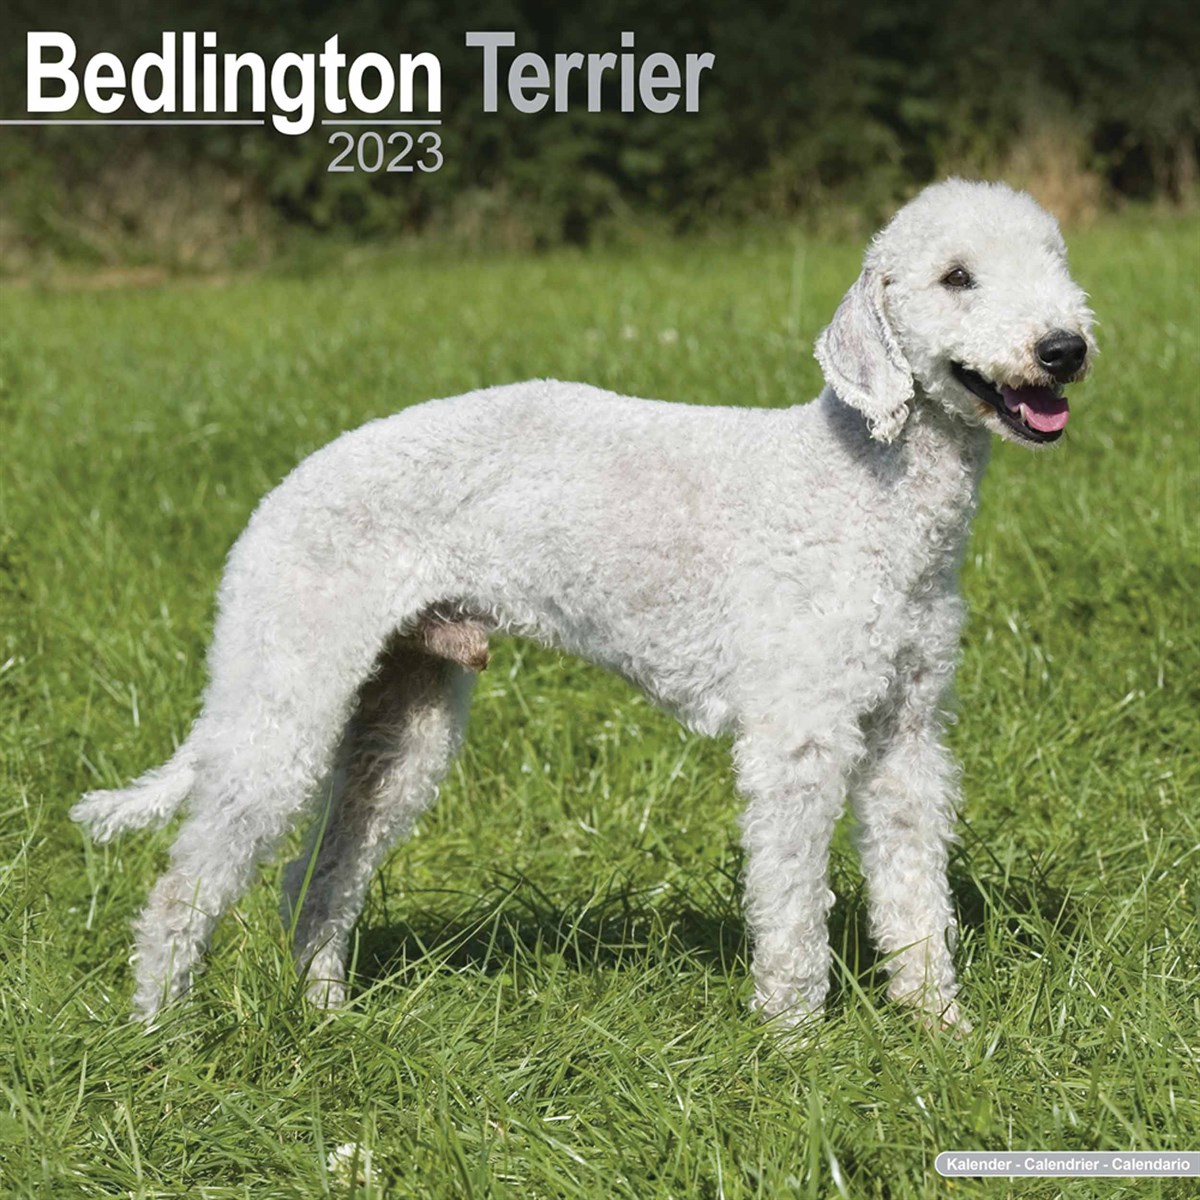 Bedlington Terrier 2023 Calendars